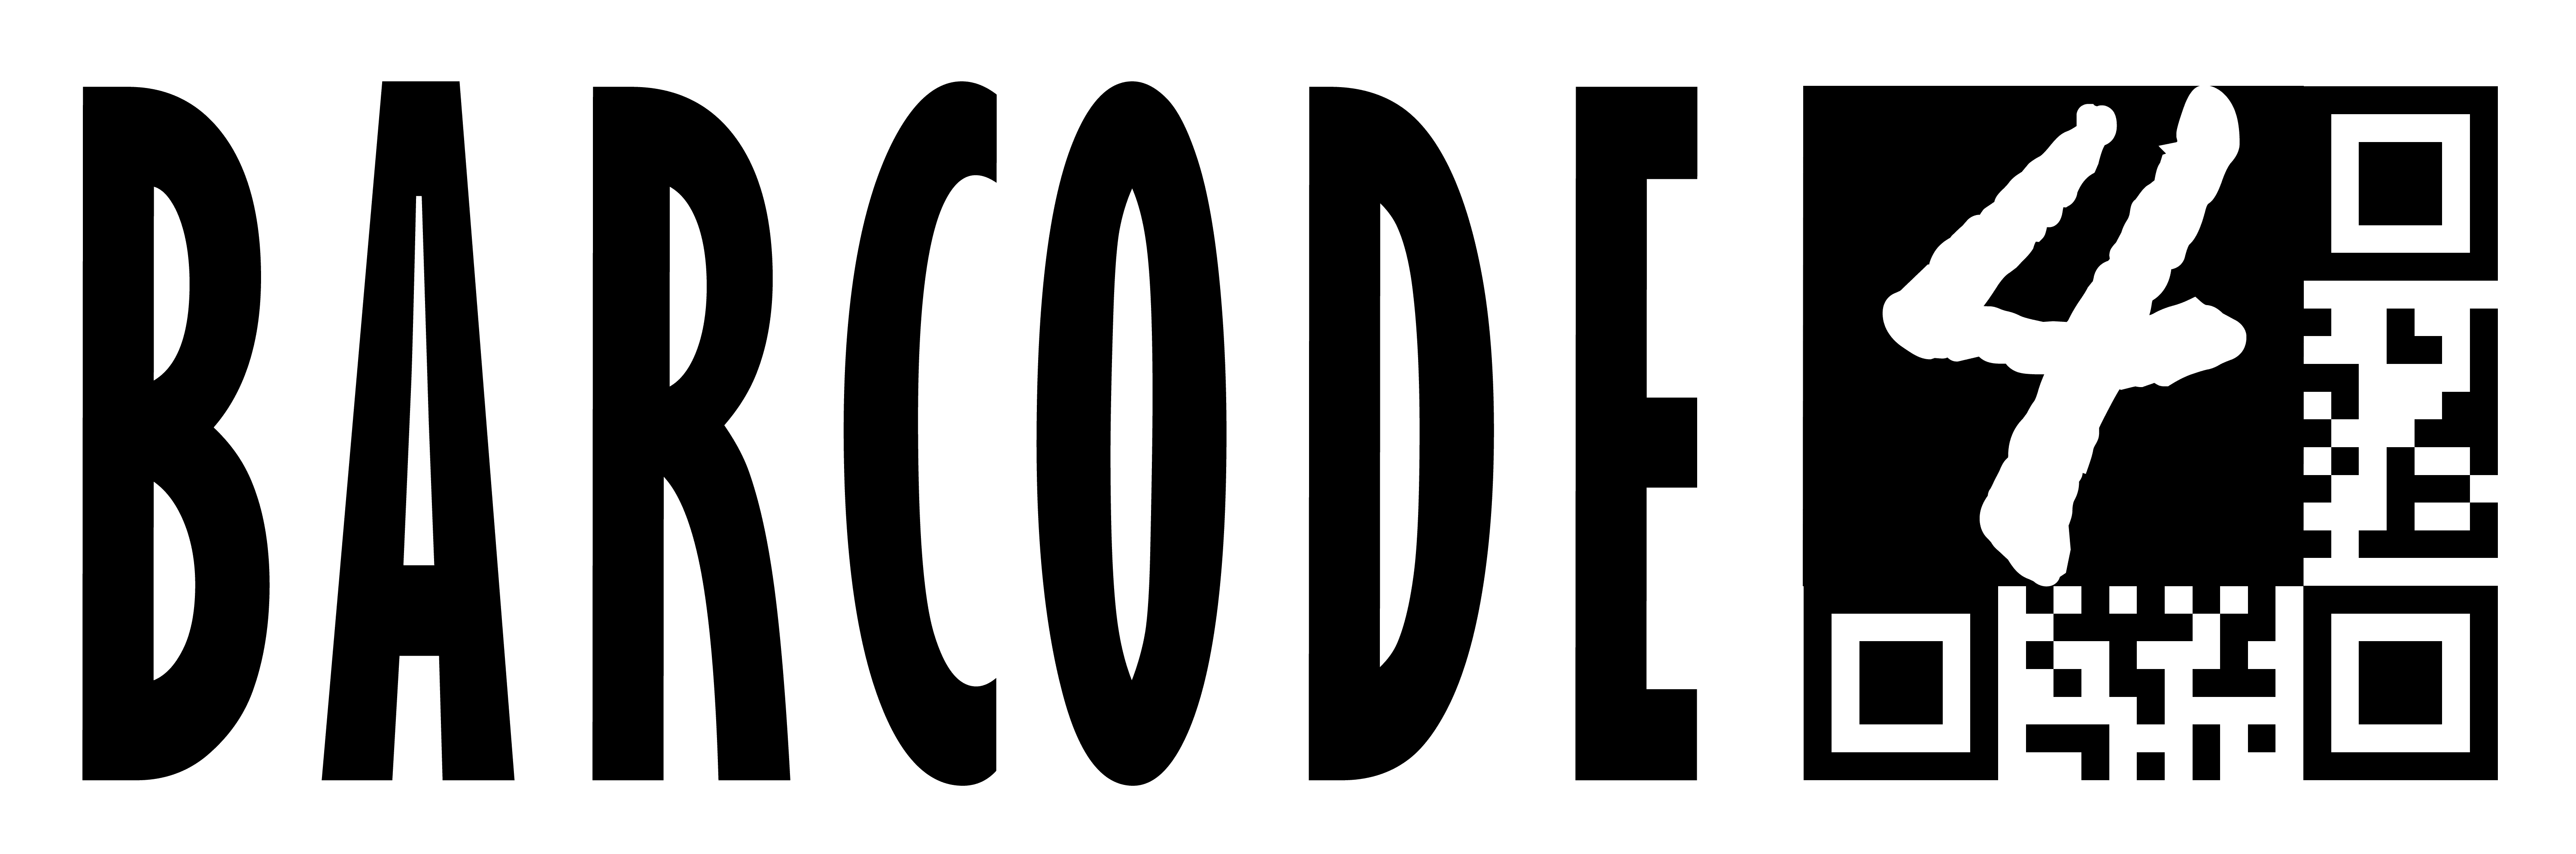 Barcode4.com Retirement